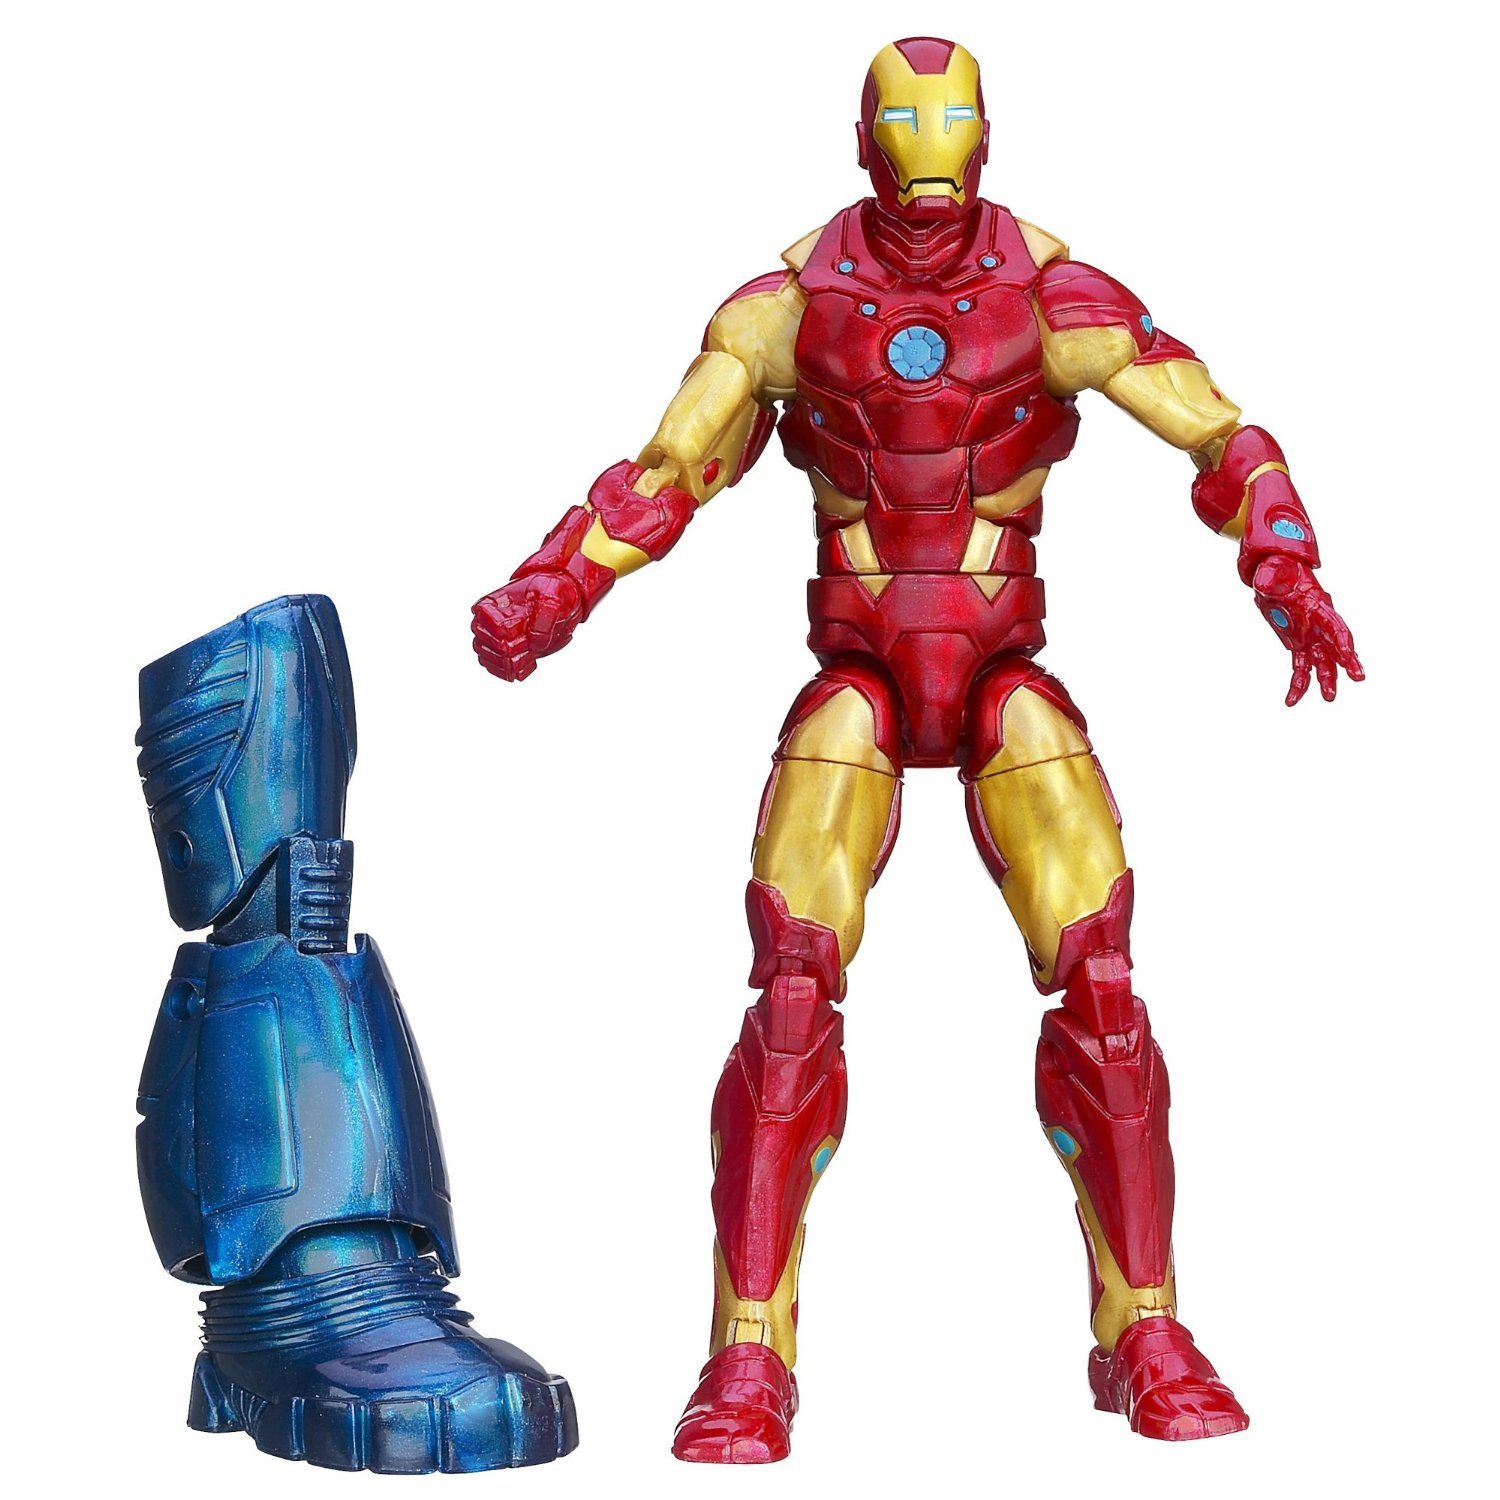 https://www.actionfigurepics.com/wp-content/uploads/2013/05/Marvel-Iron-Man-Legends-Heroic-Age-Iron-Man-Figure.jpg